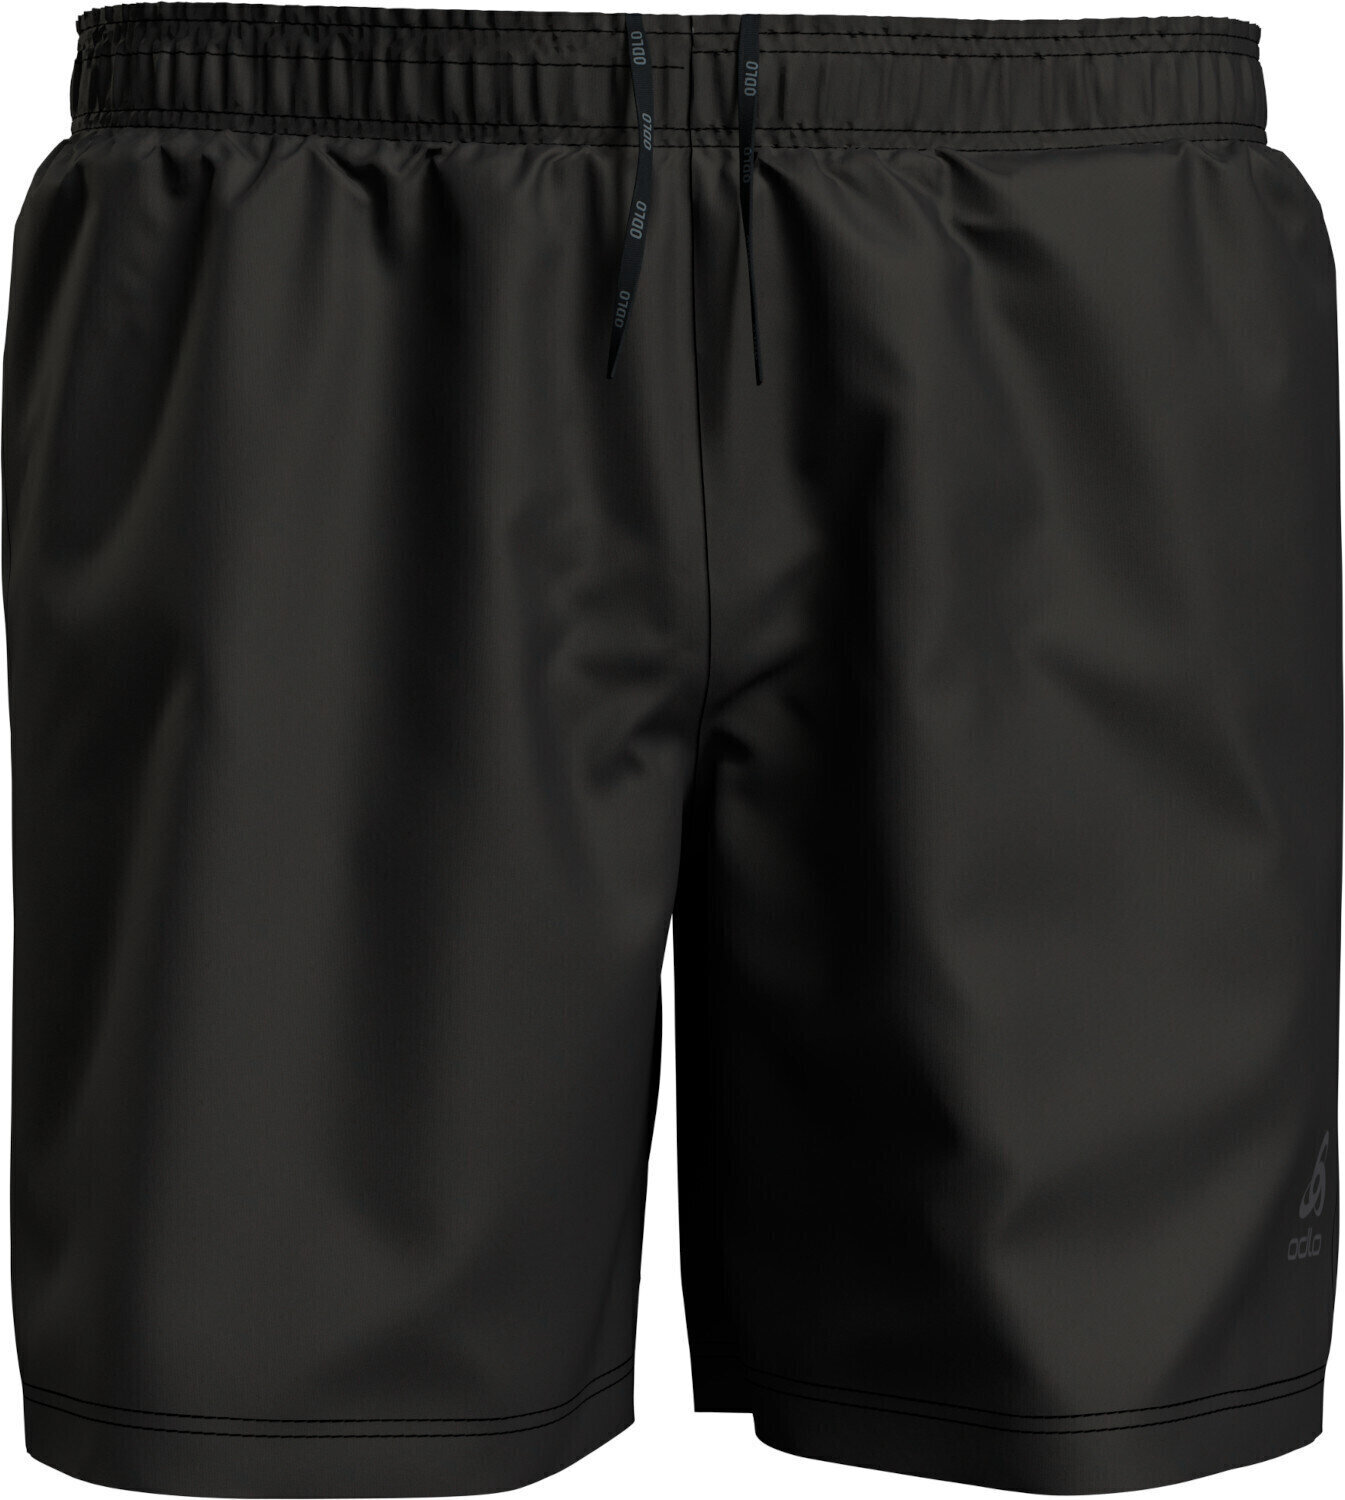 Pantalones cortos para correr Odlo Element Light Shorts Black S Pantalones cortos para correr